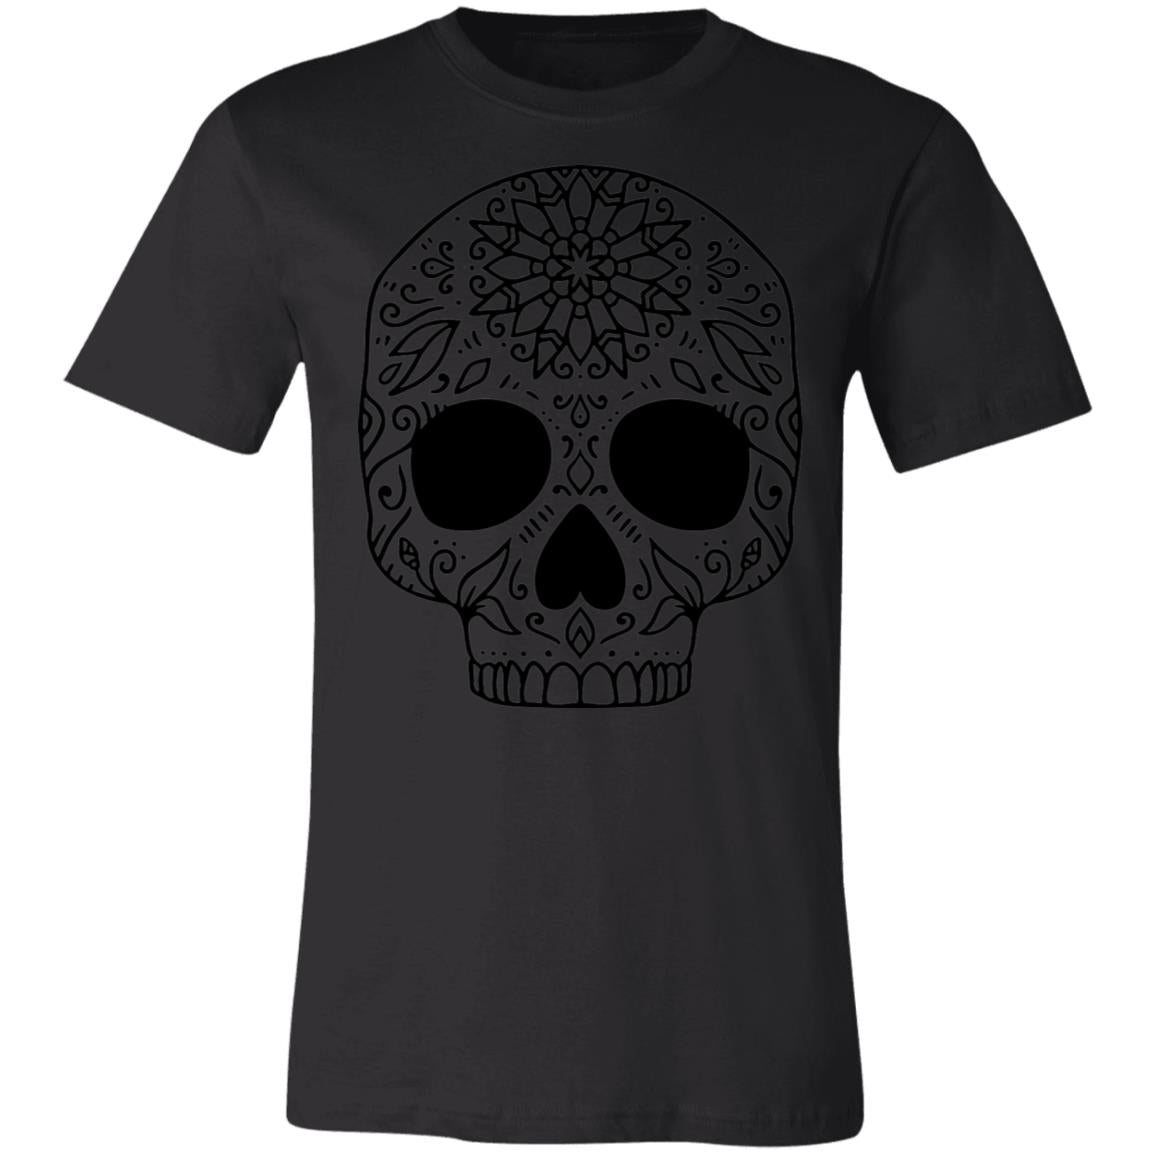 Skull 125 Santa Muerte Shirt-Express Your Love Gifts